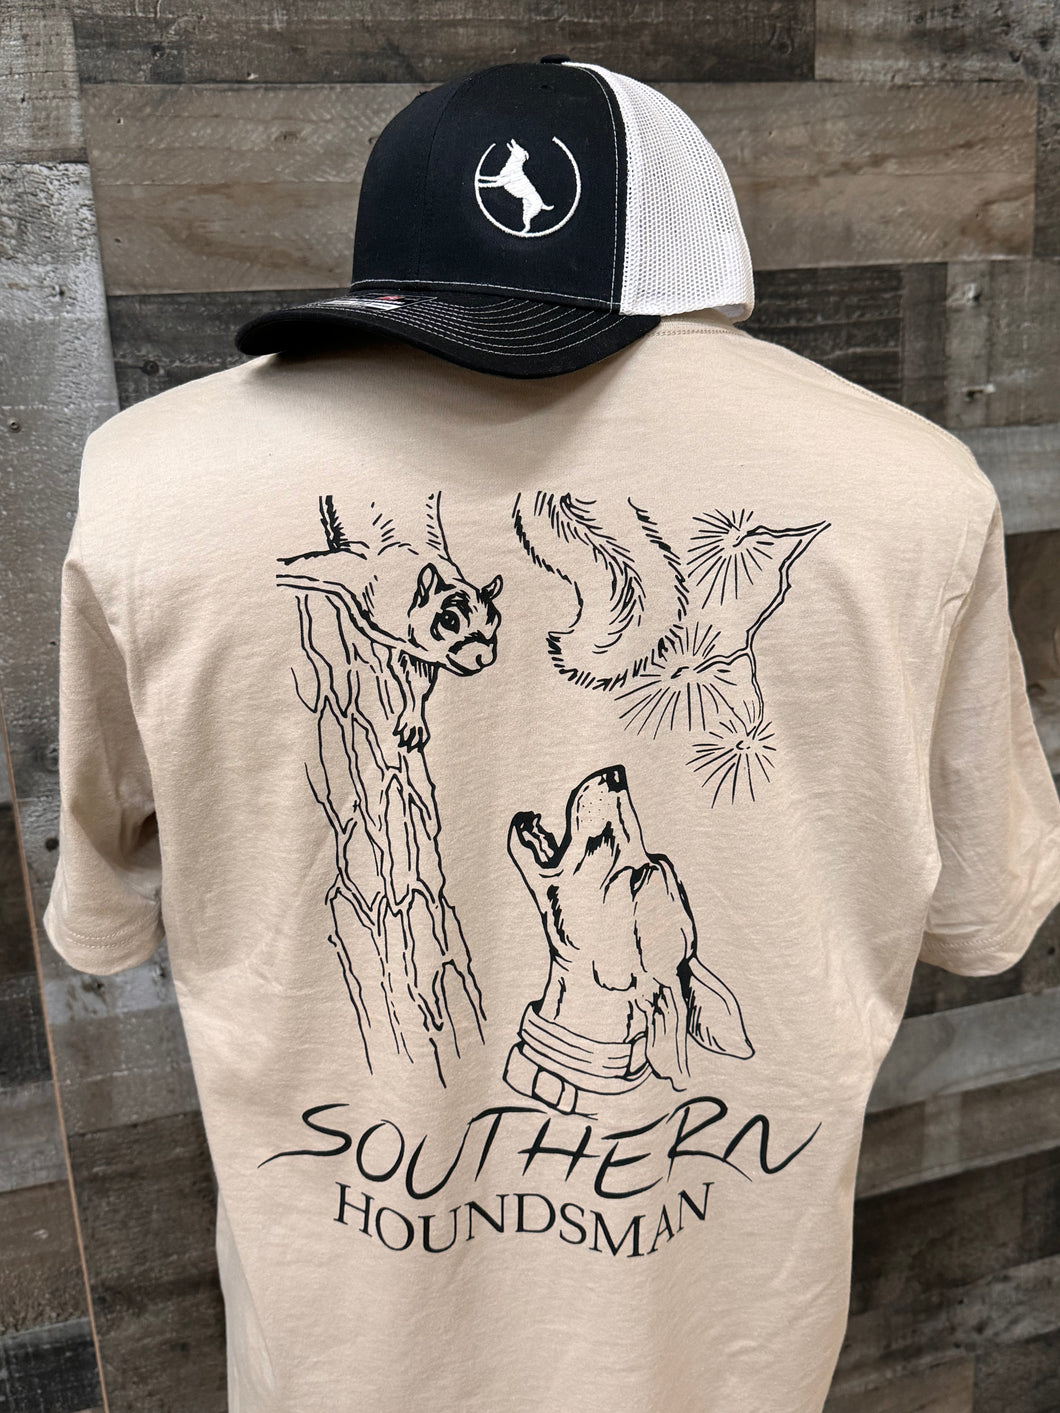 Treed Squirrel Up Close Southern Houndsman T-Shirt